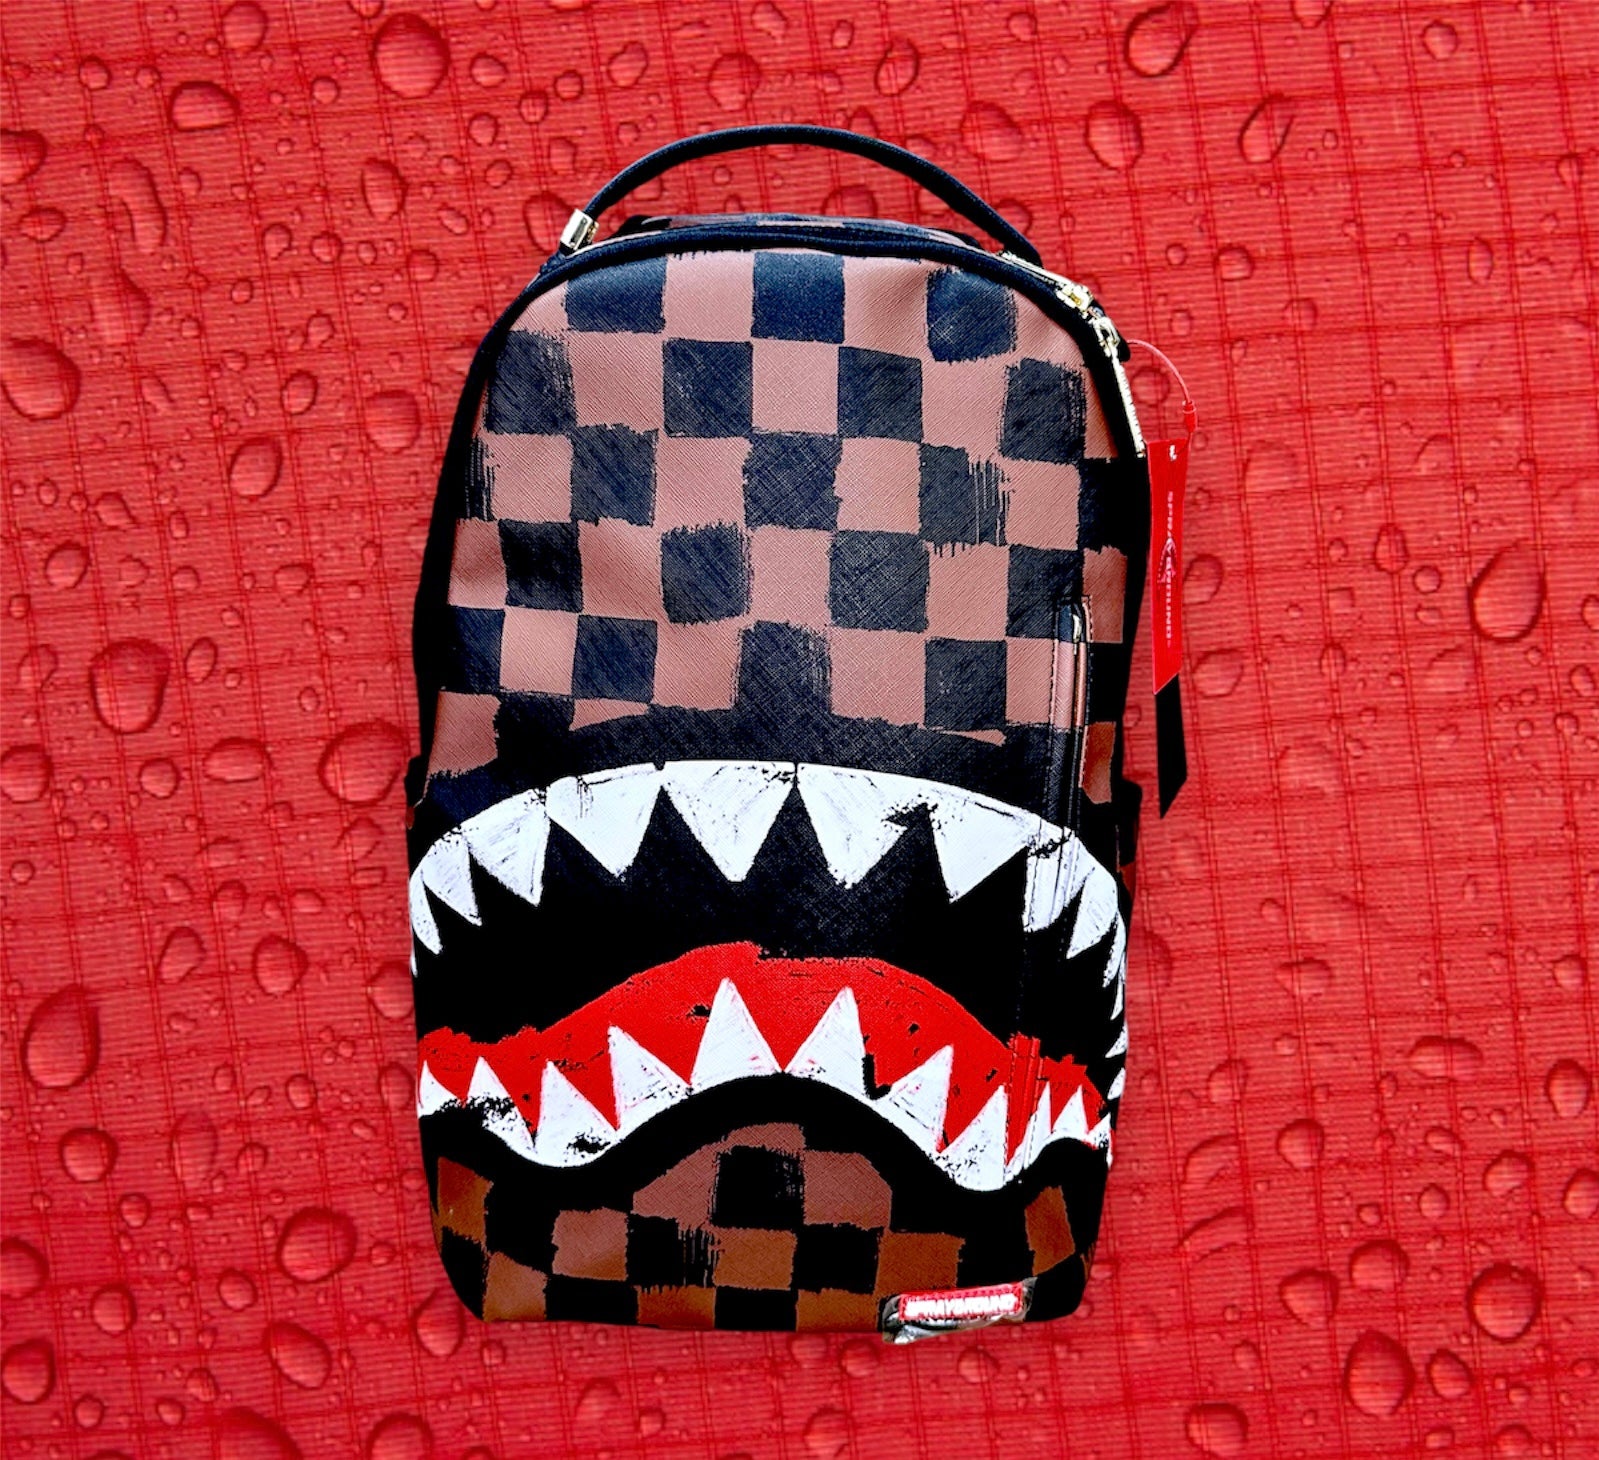 Sprayground  Sharks in Paris Painted DLX backpack – Grooveman Music